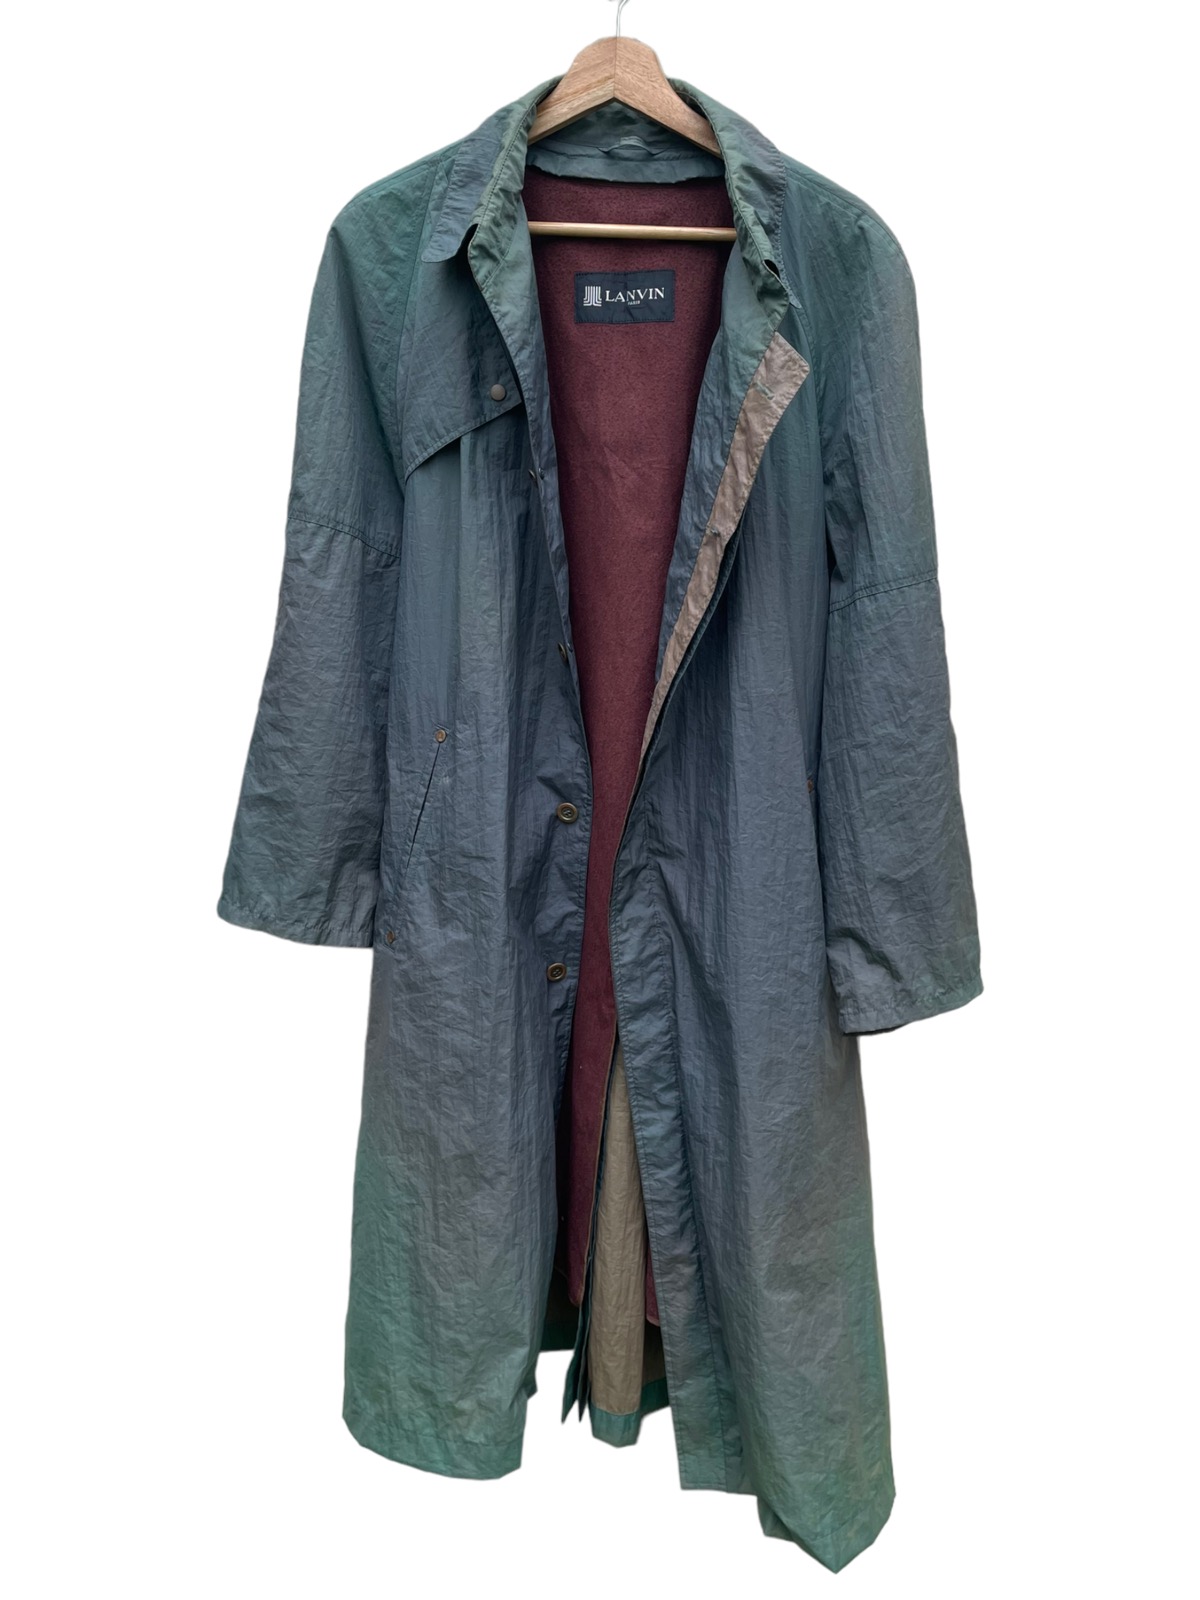 💥 LANVIN PARIS Trench Coat Long Coat Jacket - 1